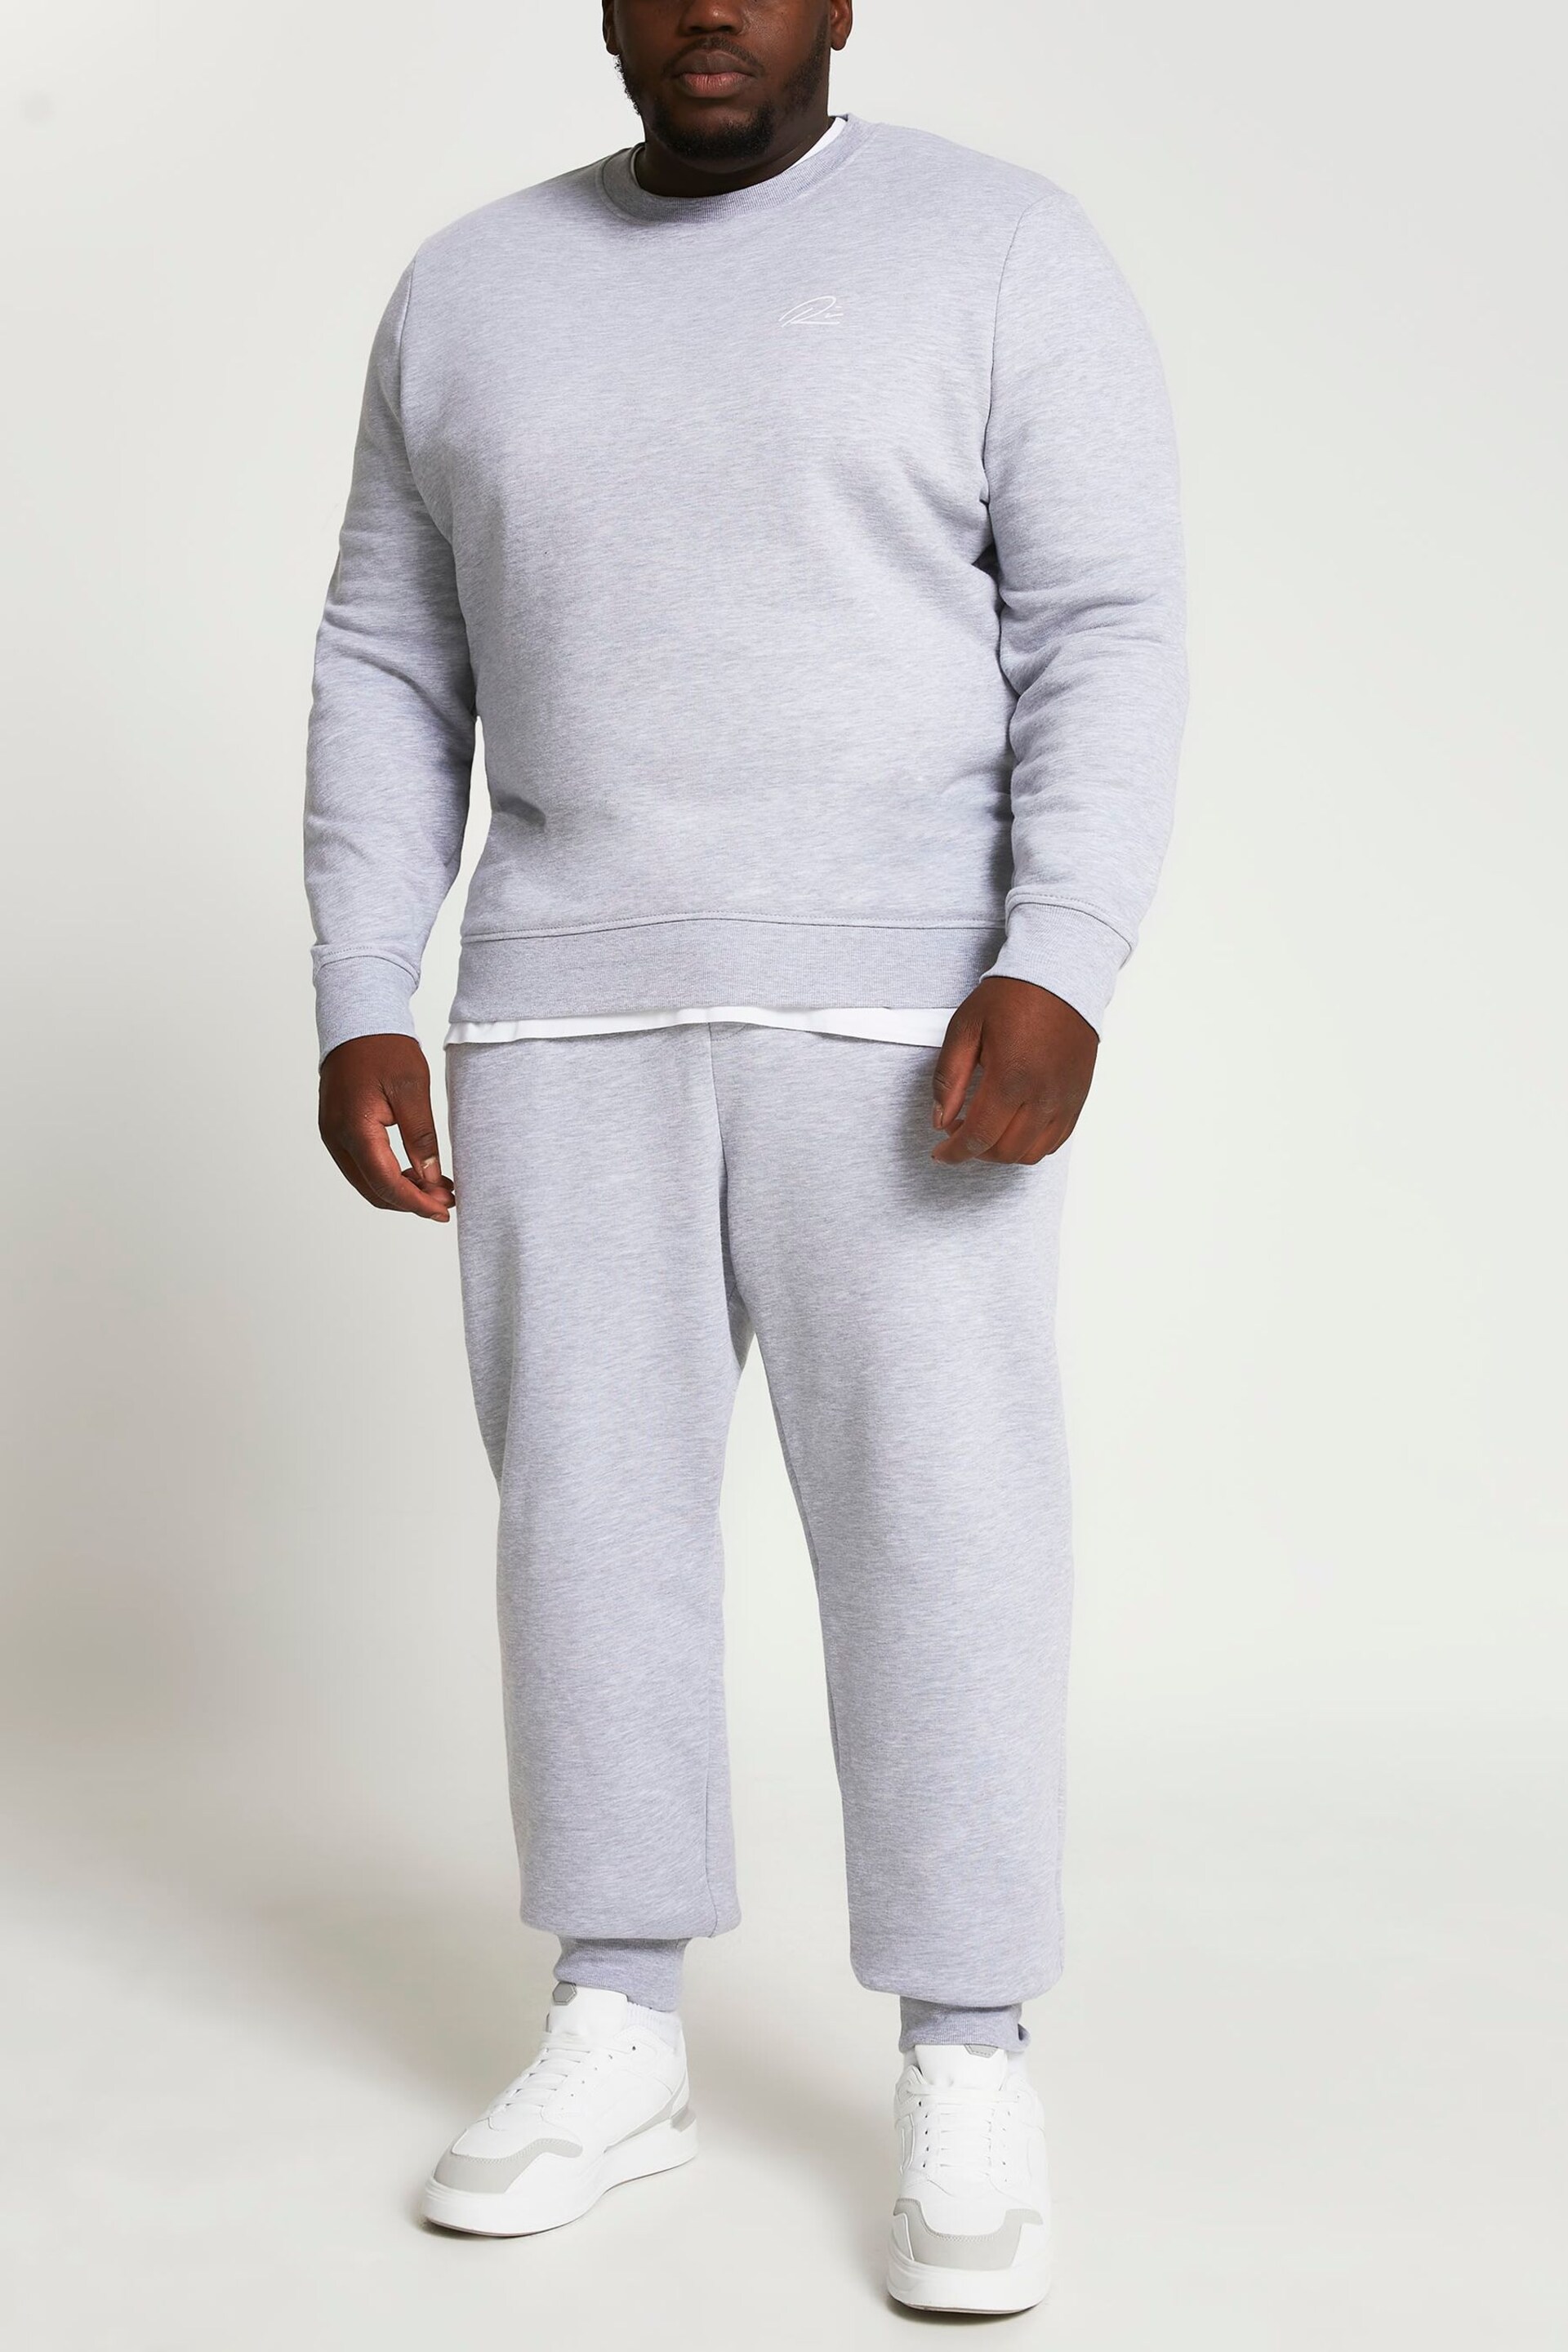 River Island Grey Big & Tall Slim fit Sweatshirt - Image 3 of 4